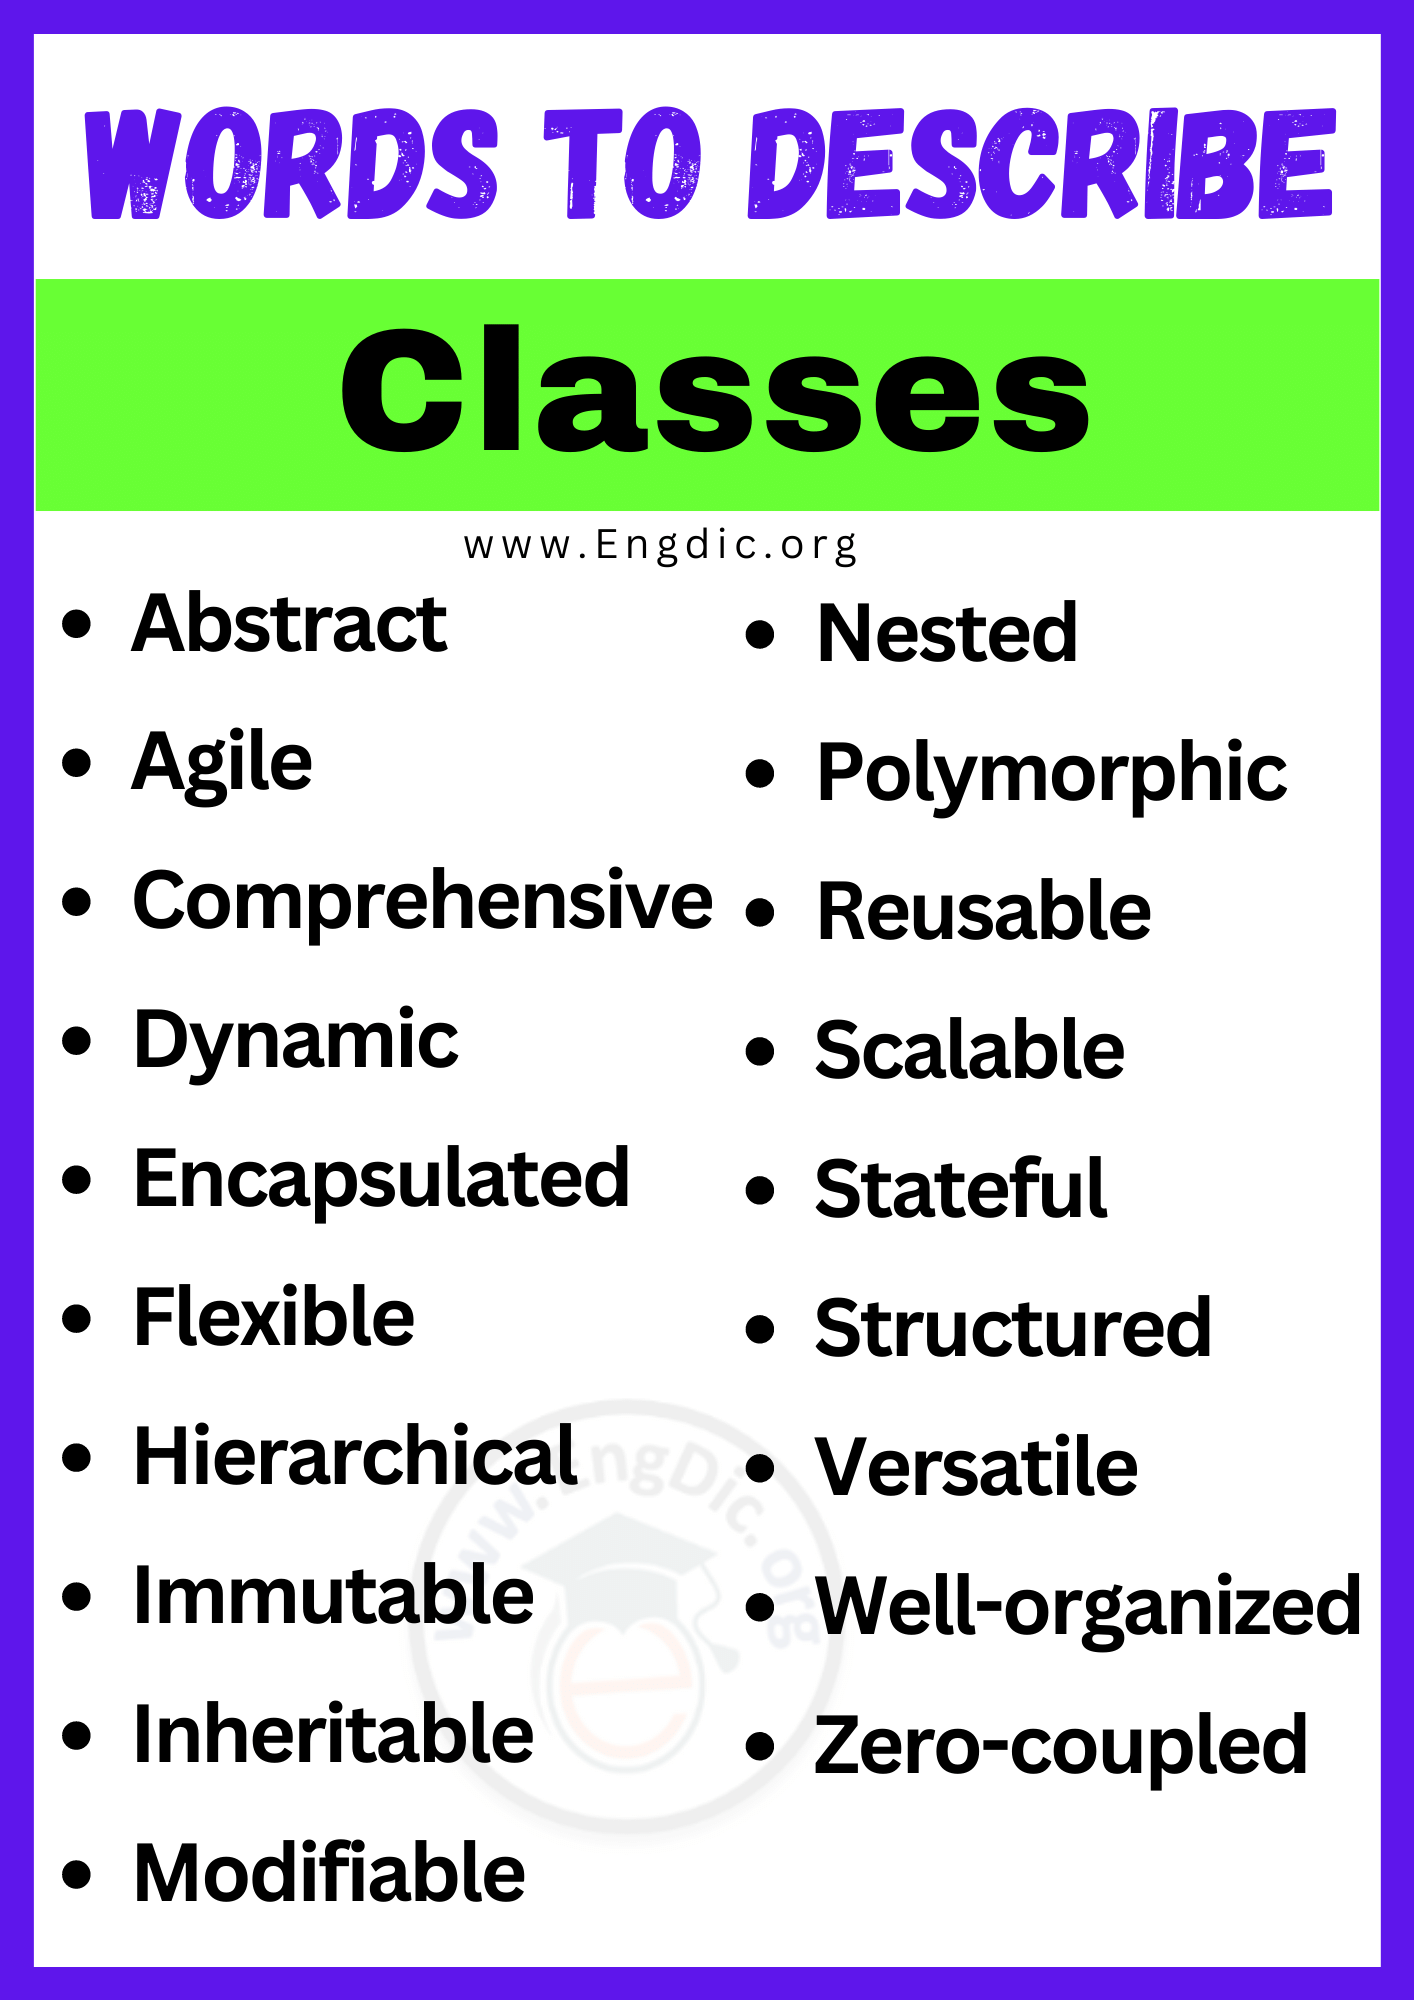 Words to Describe Classes